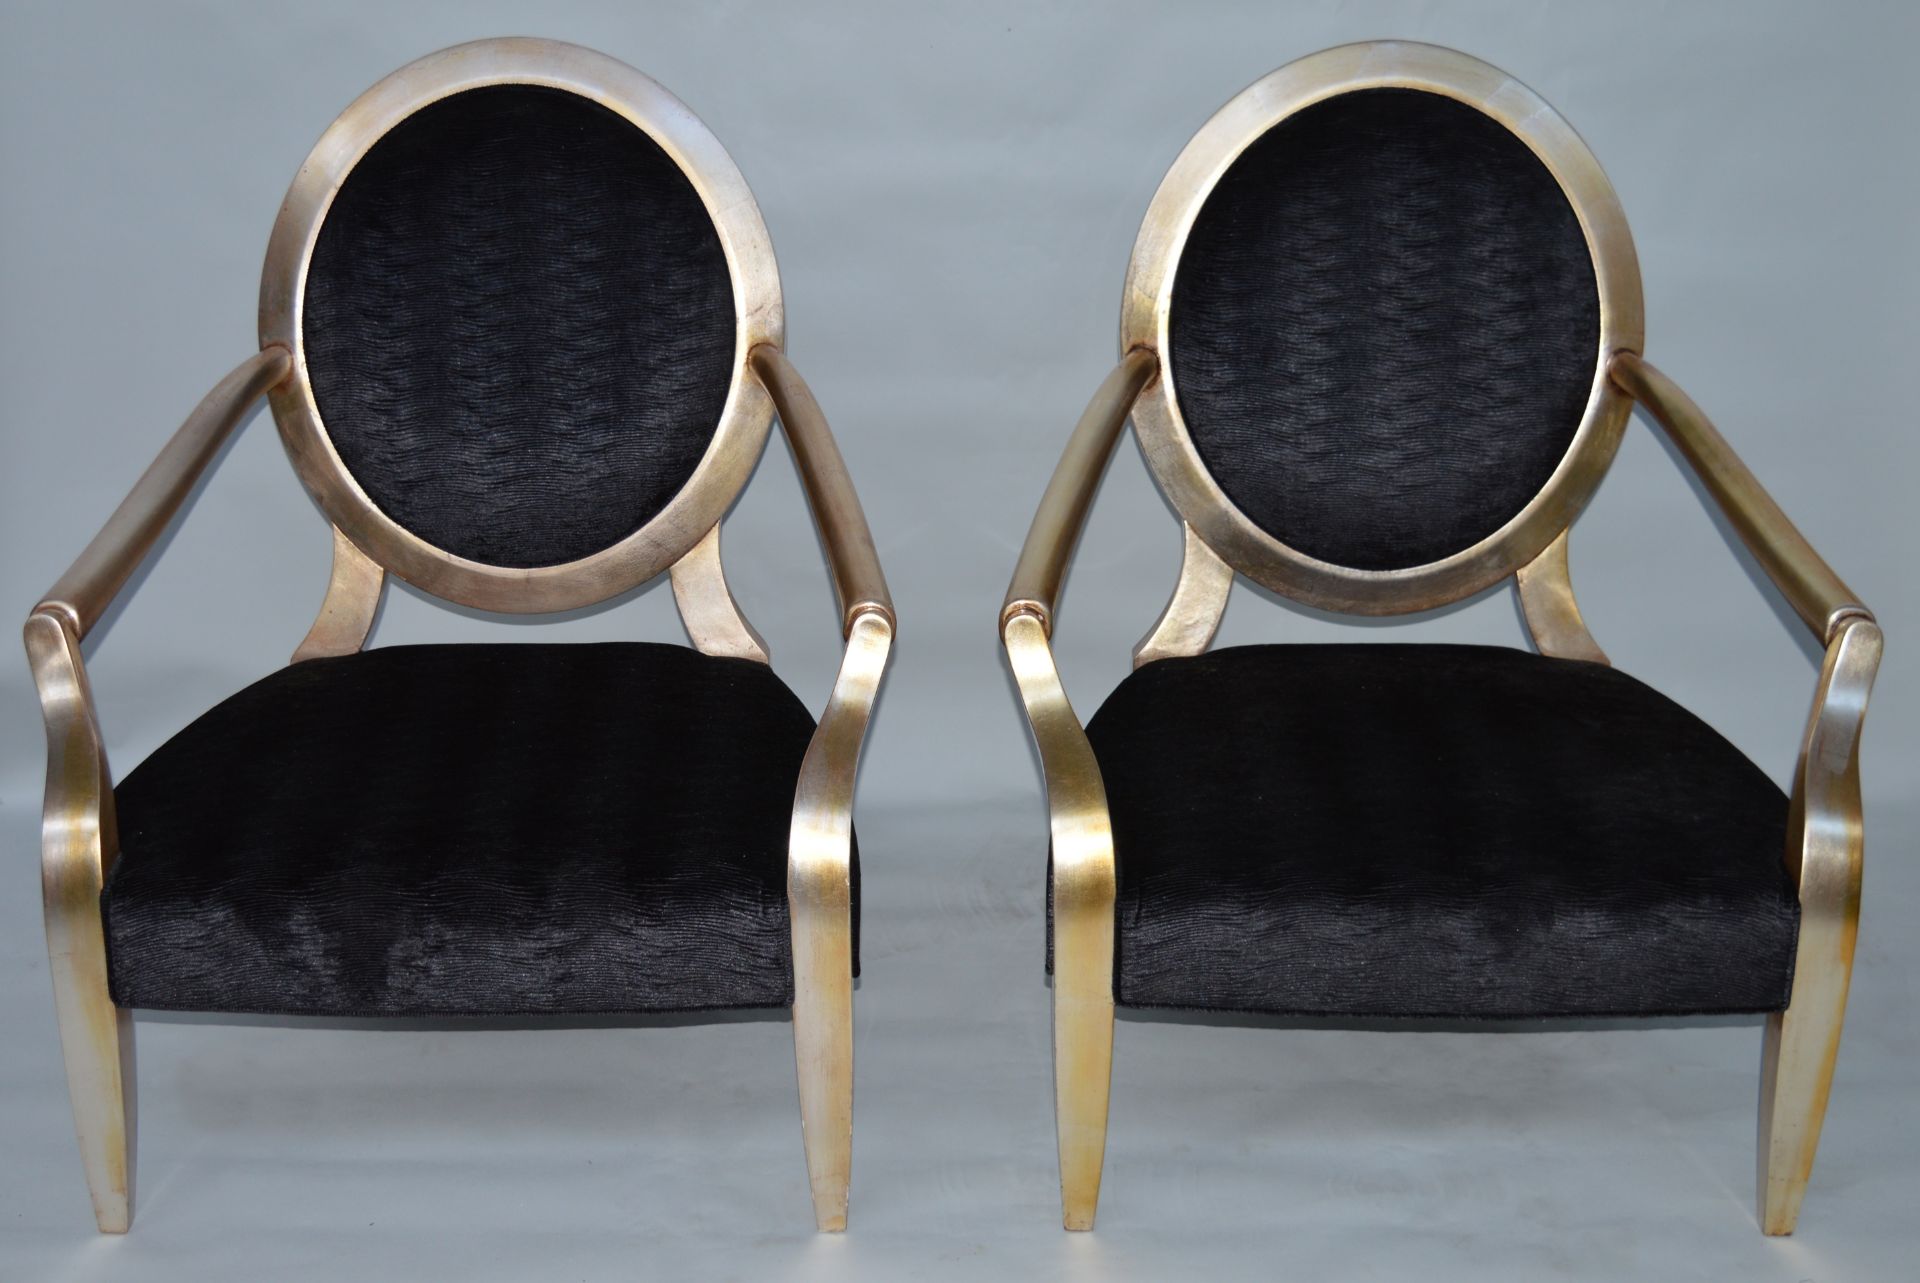 2 x Duresta Nero Chairs - individual Fabric - CL08 - Location Altrincham, WA14